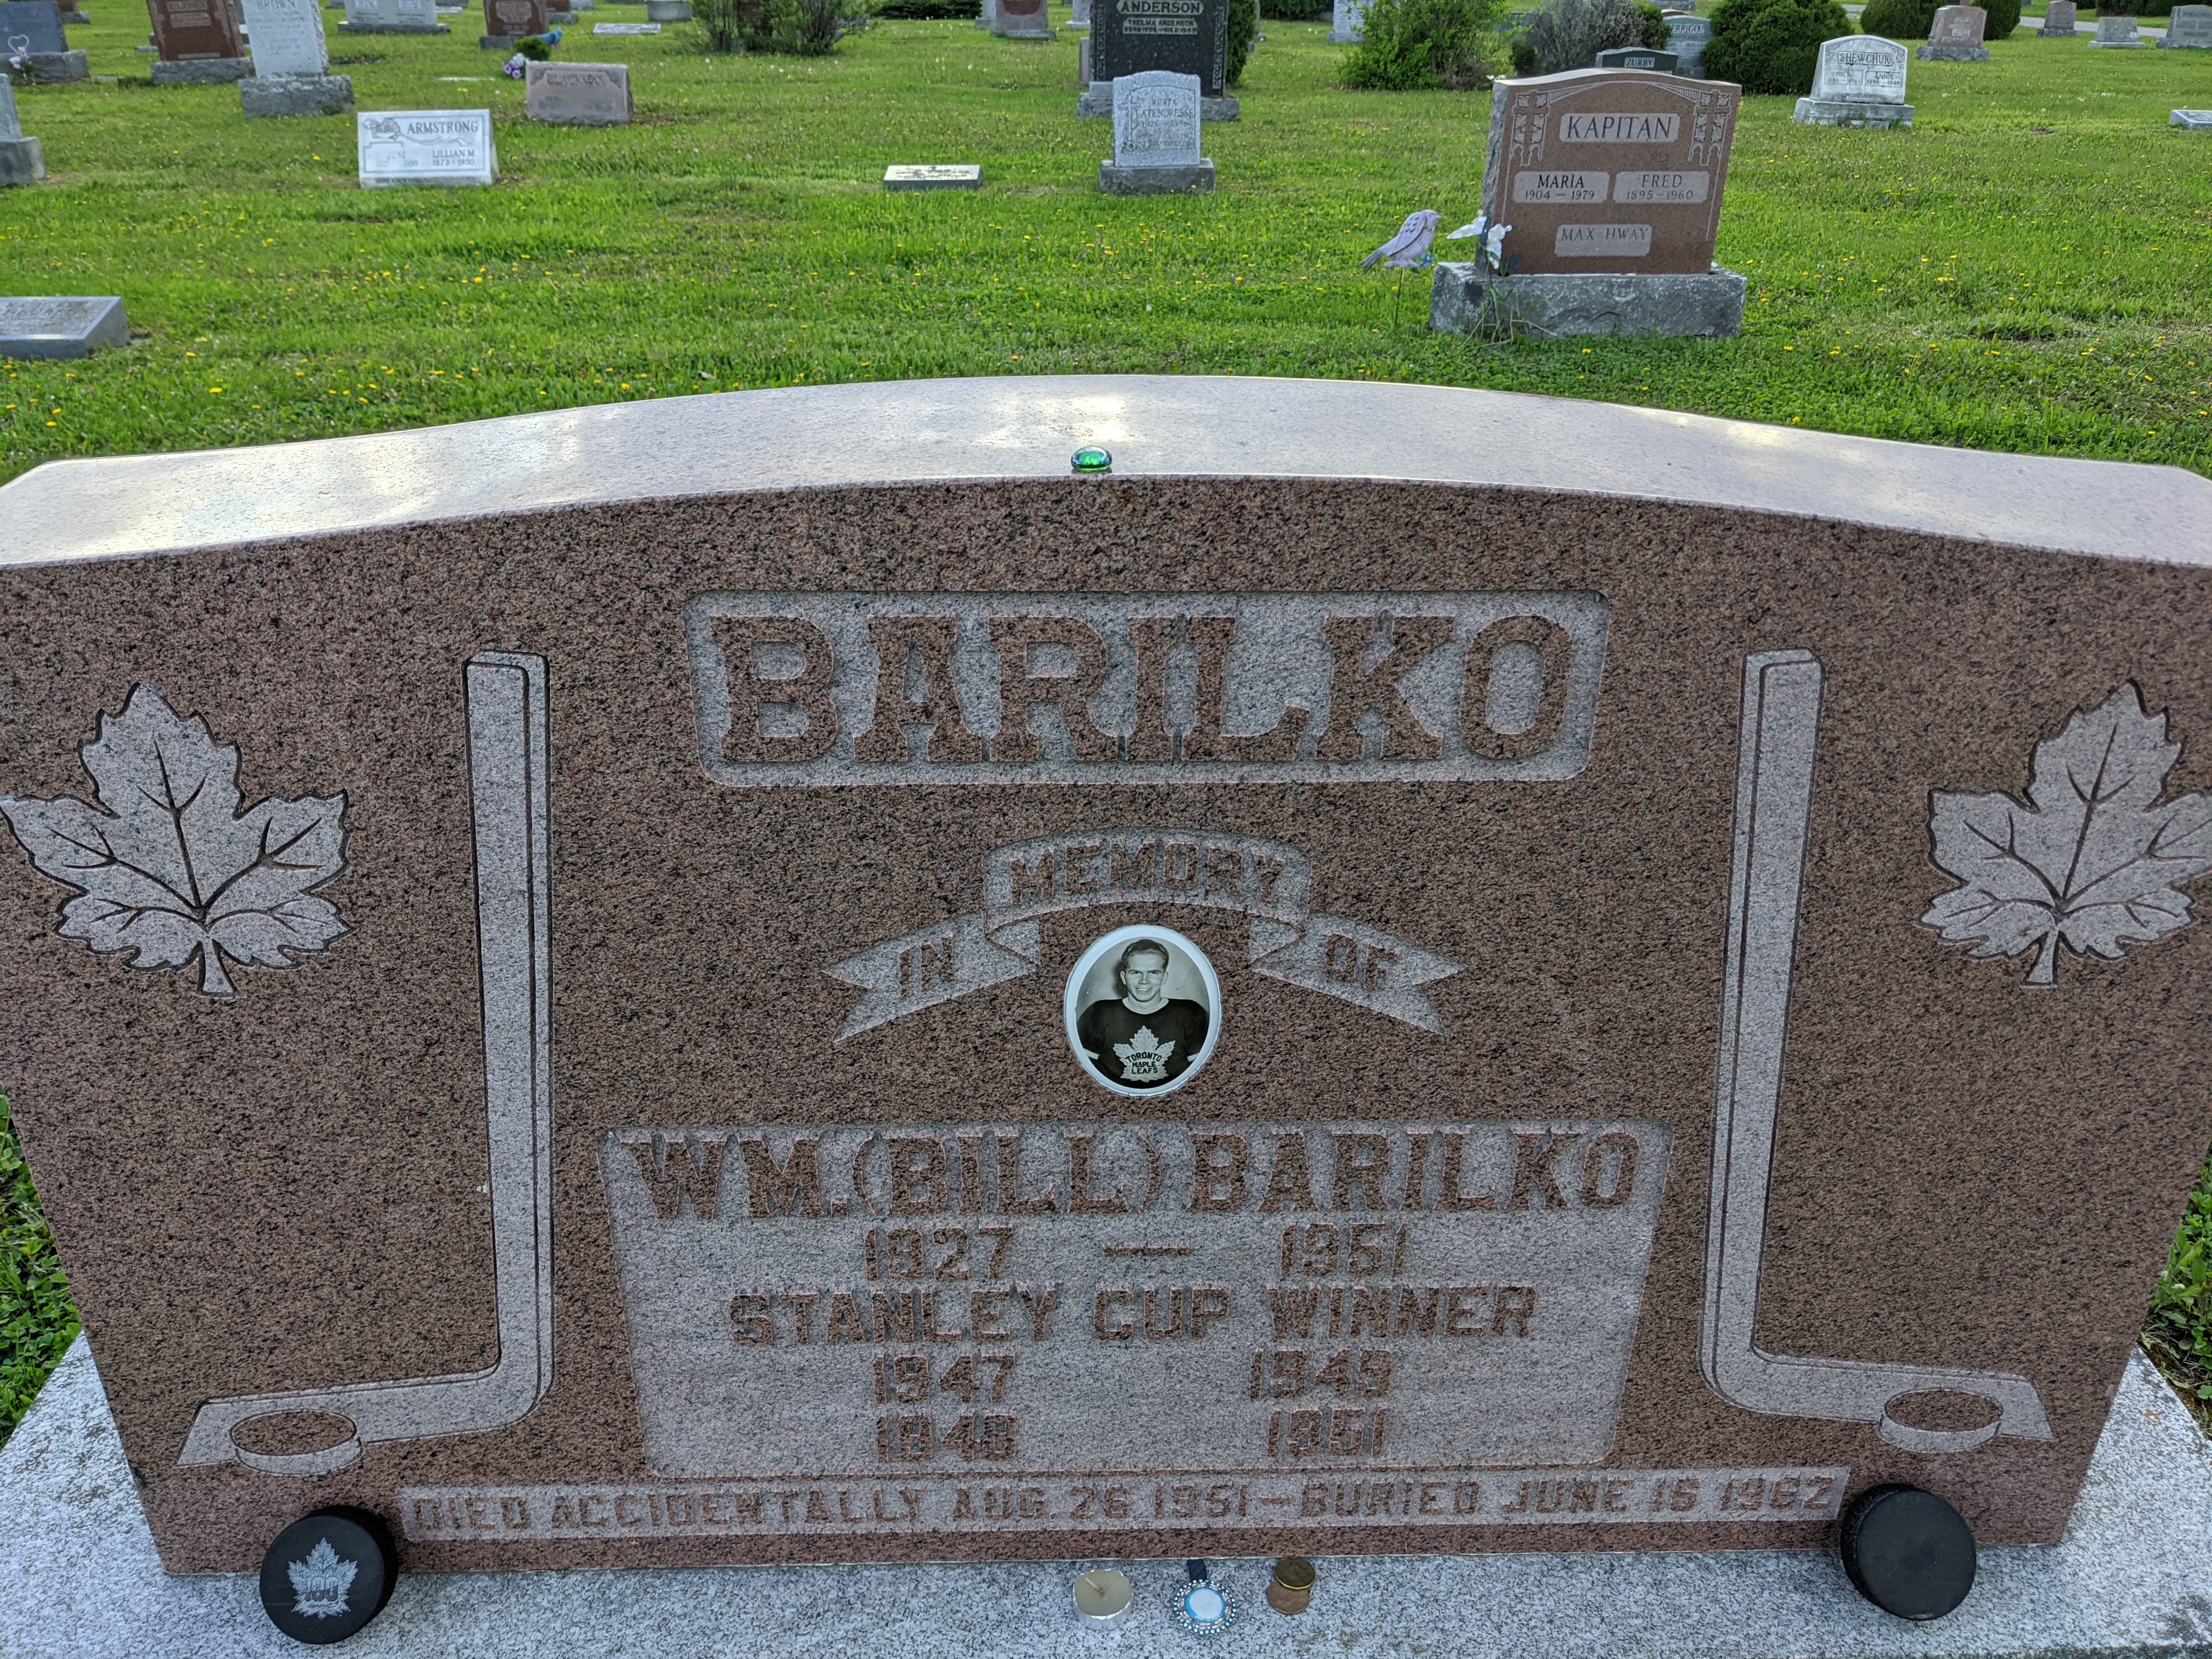 Bill Barilko - April 21, 1951: the most memorable goal in